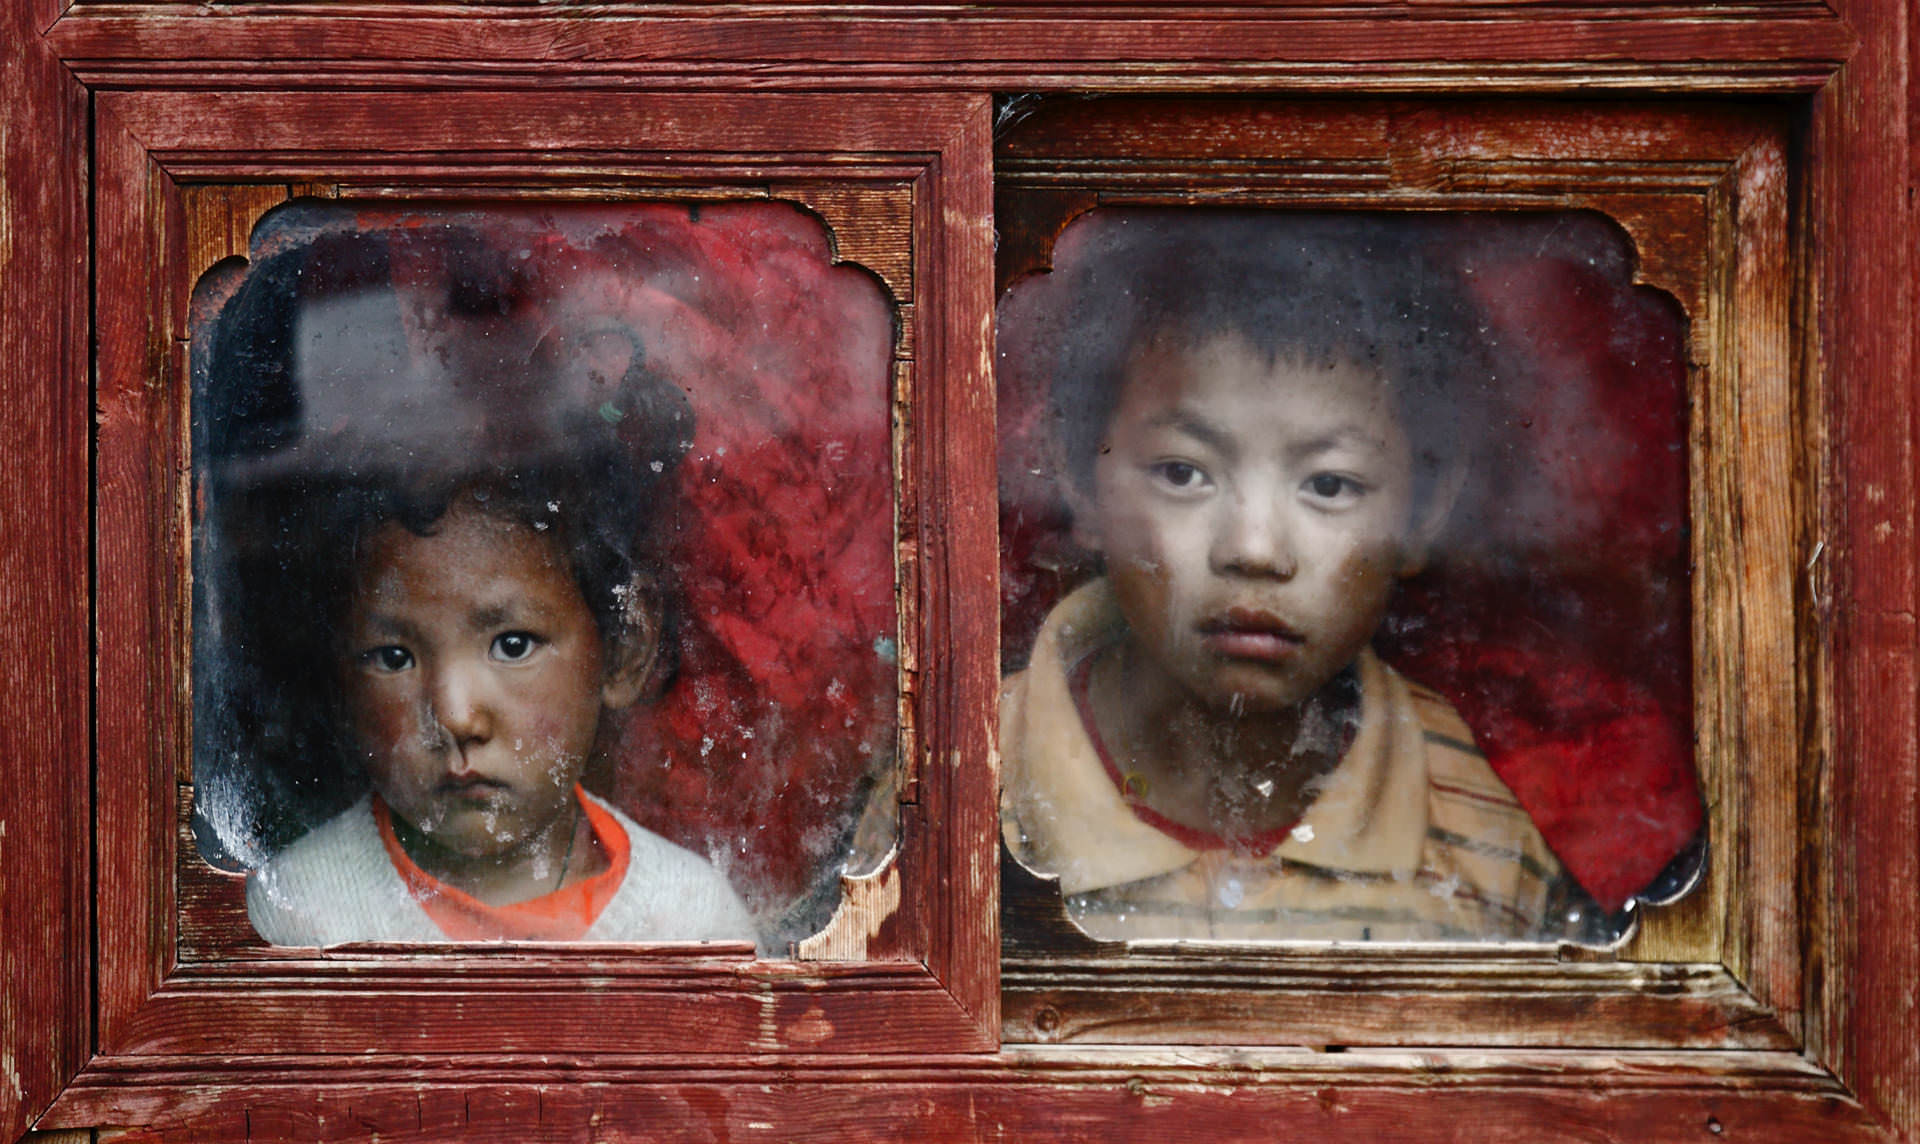 Jean-Claude Louis ©, Boy and Girl in Window, Tagong, Tibet, 2007